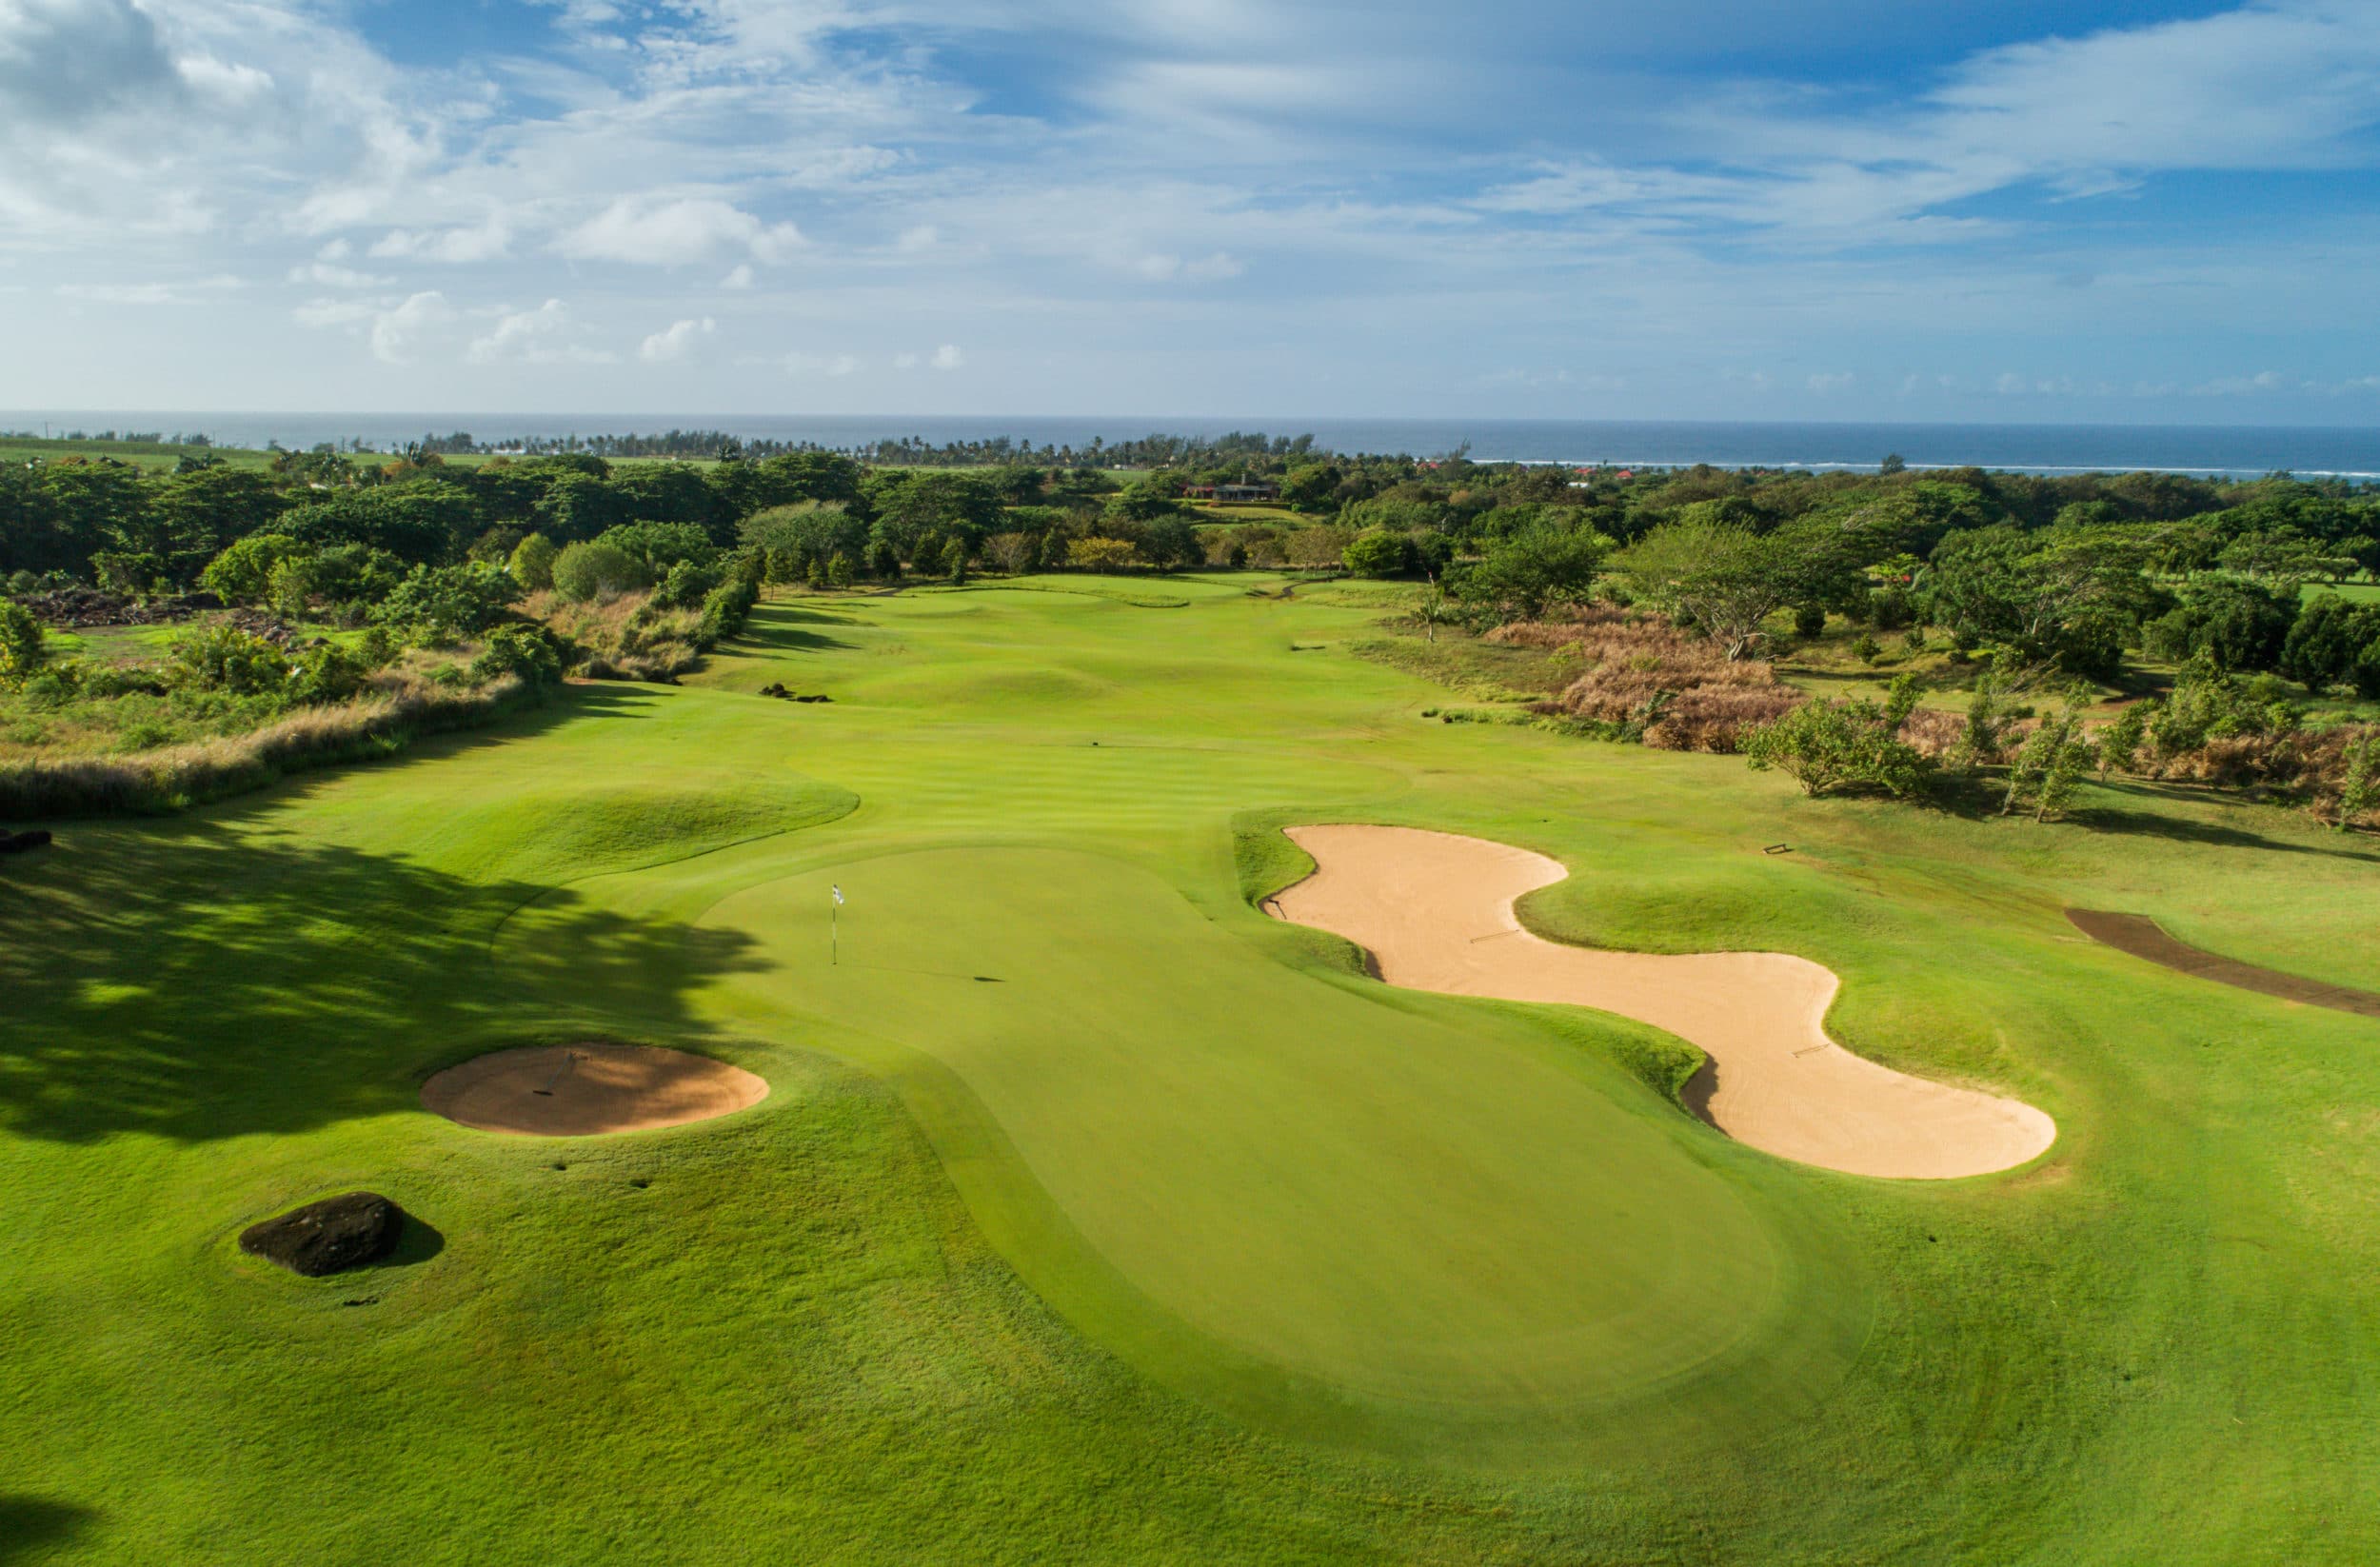 Heritage golf course, Bel Ombre, Mauritius Nov 2018 ©Mark Sampson